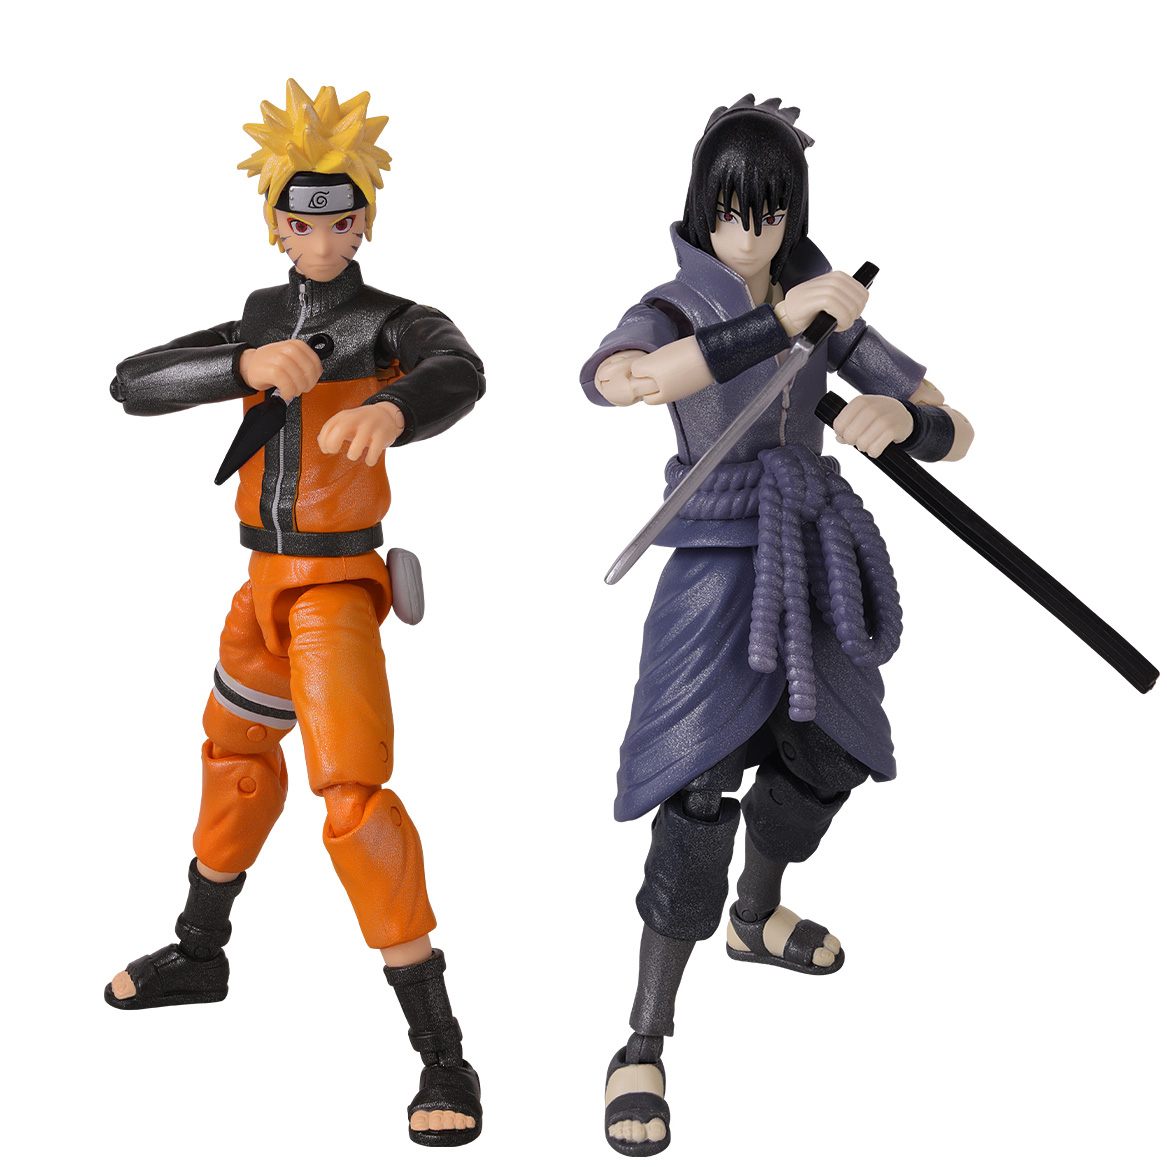 Amazon.com: ANIME HEROES Naruto Uzumaki Naruto Action Figure : Toys & Games